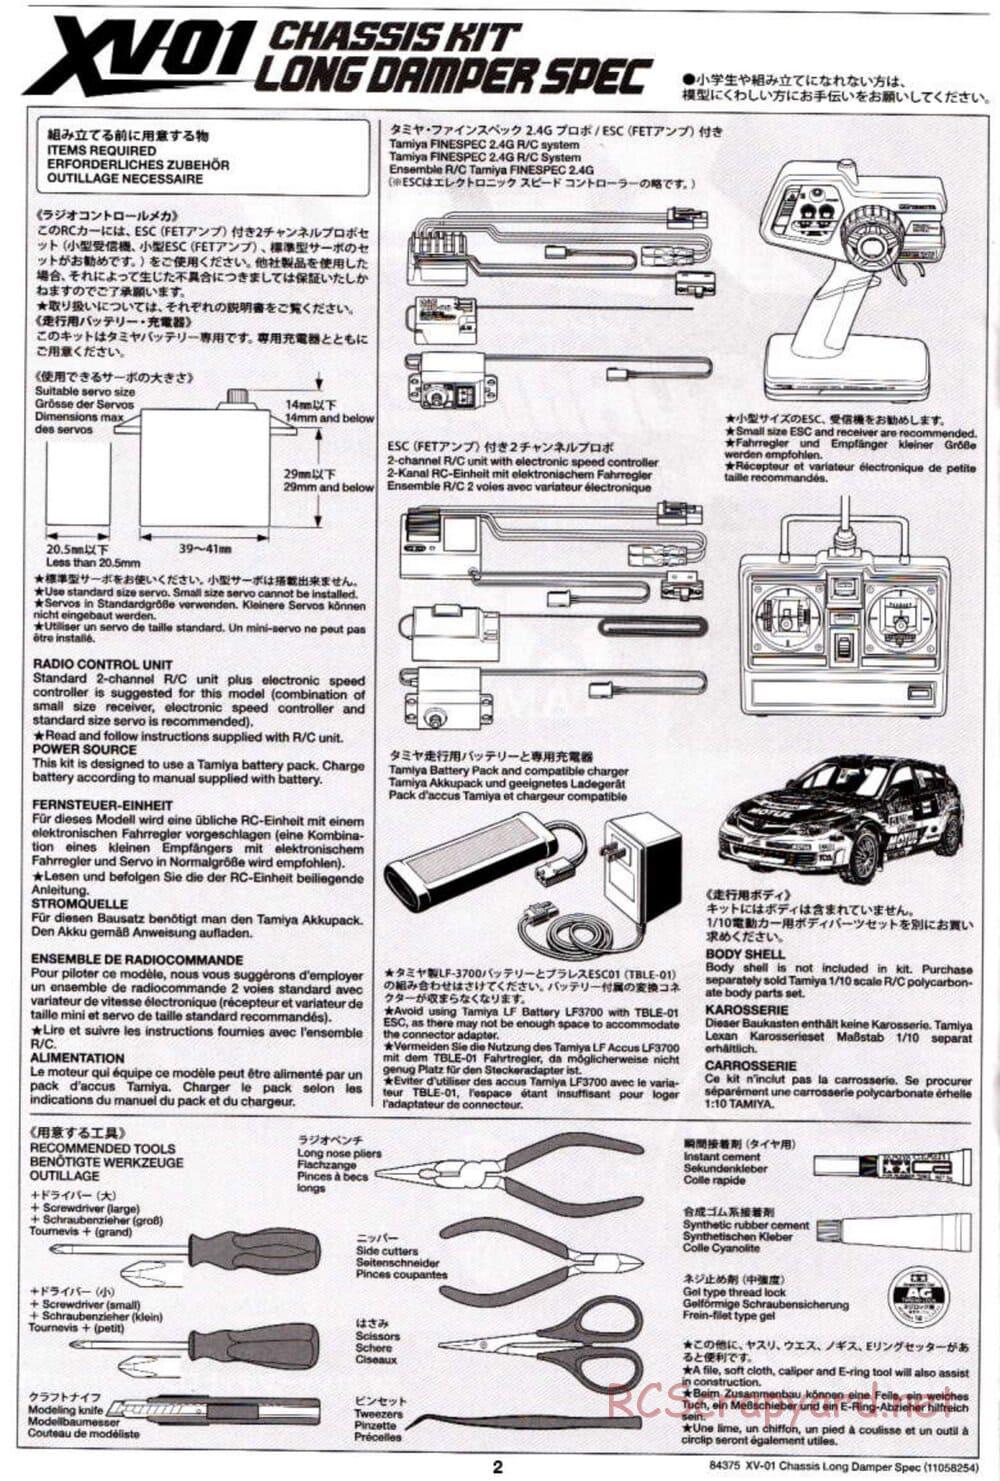 Tamiya - XV-01 Long Damper Spec Chassis - Manual - Page 2